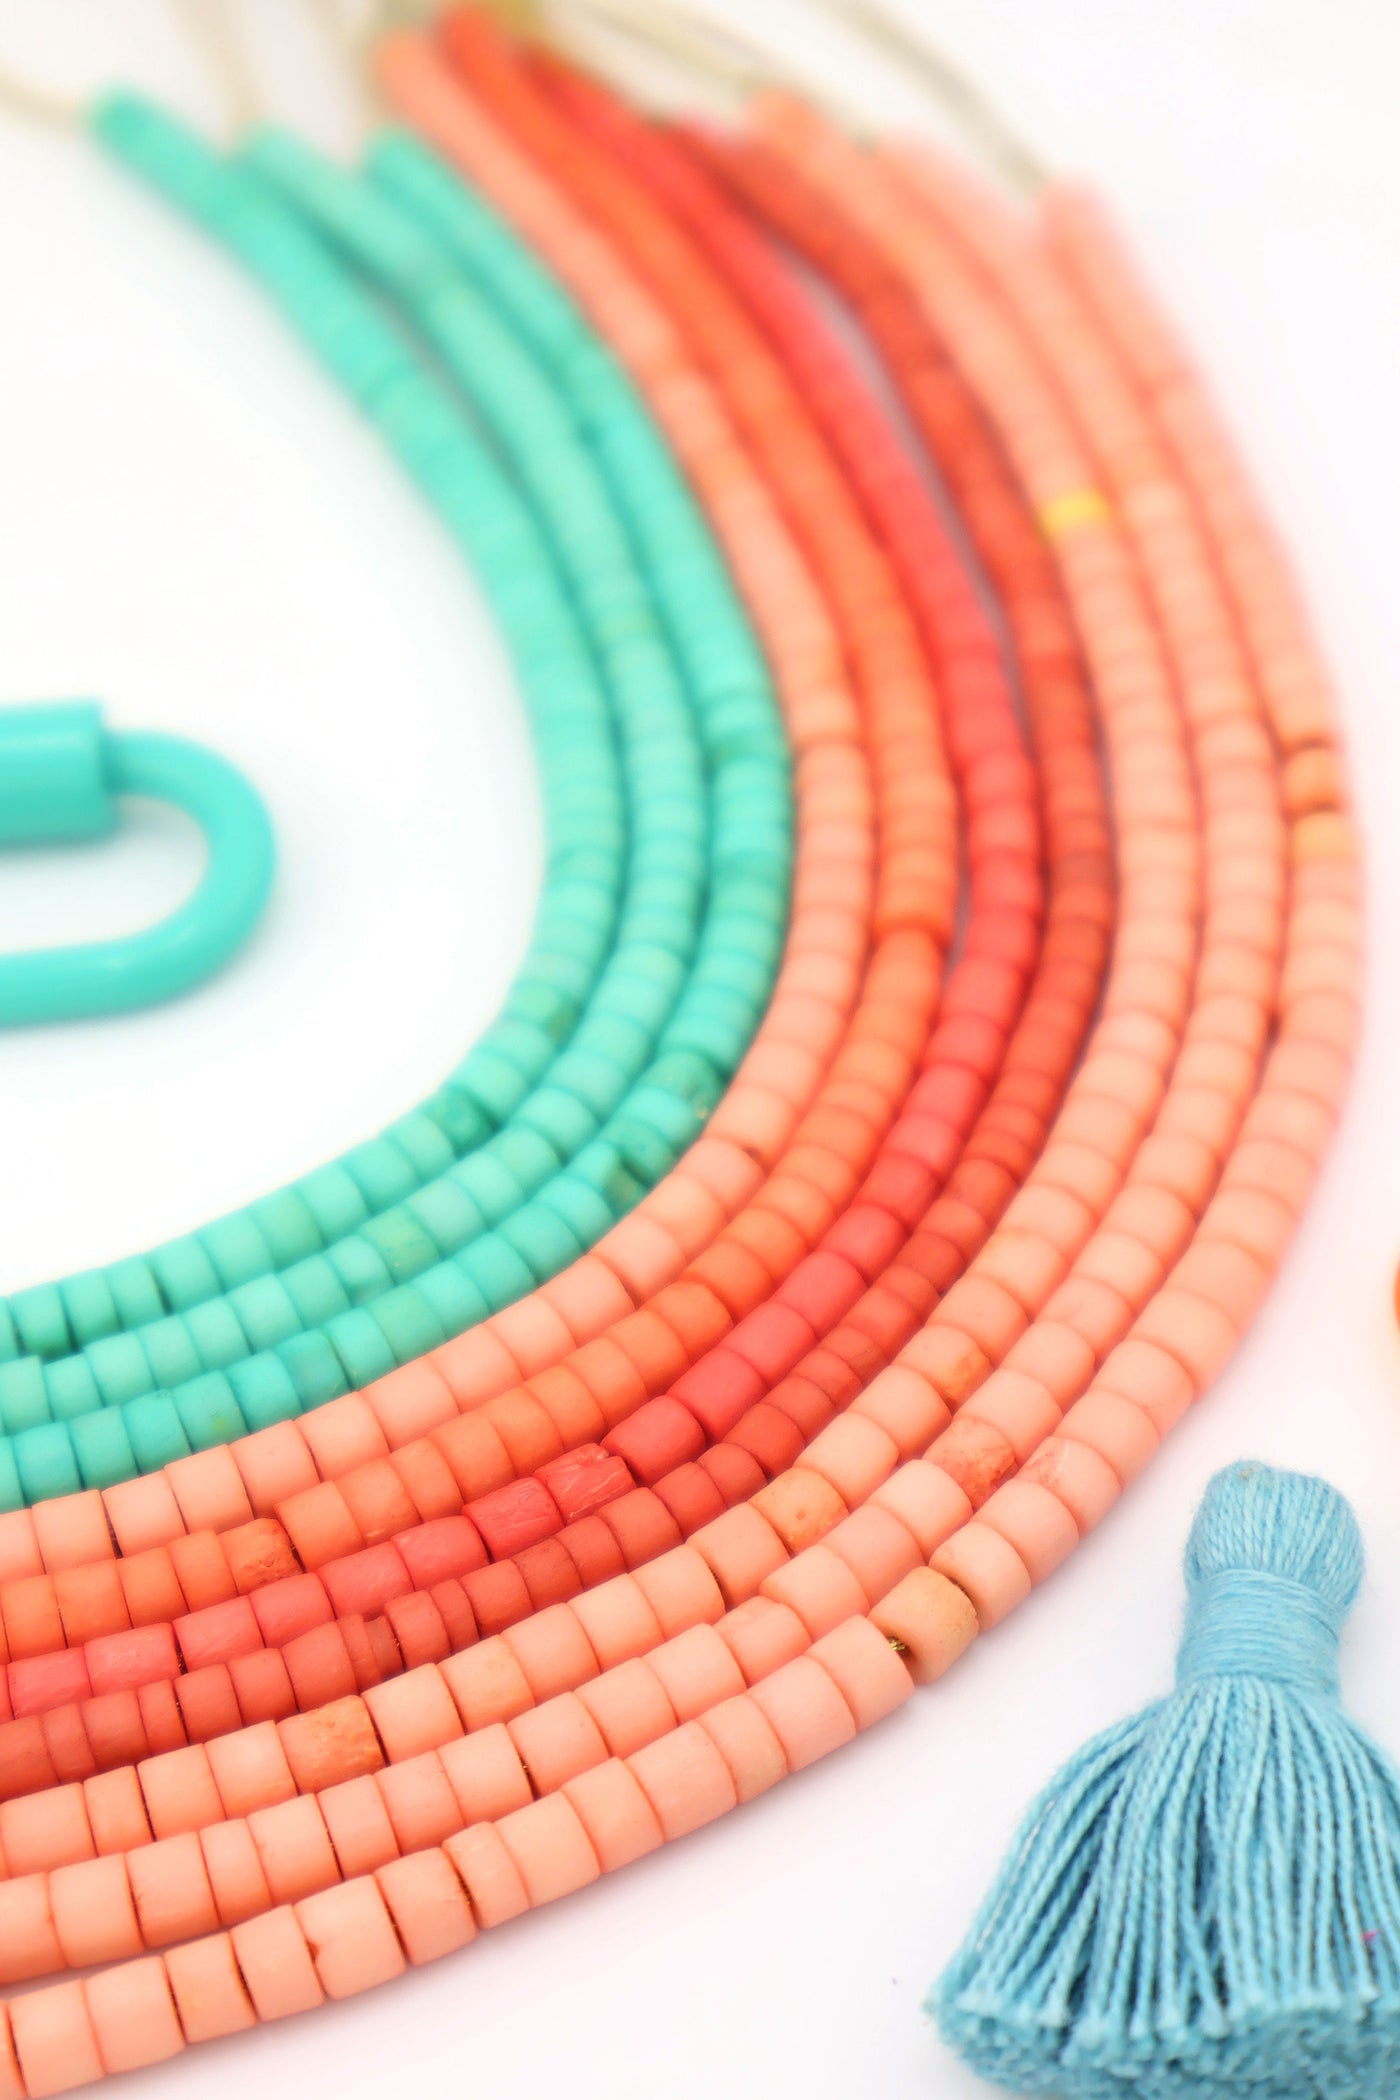 Exclusive Bead Bundle: Coral Beach Handmade Heishi Bone Beads, 5x3mm, 10 Strands, 800+ Beads